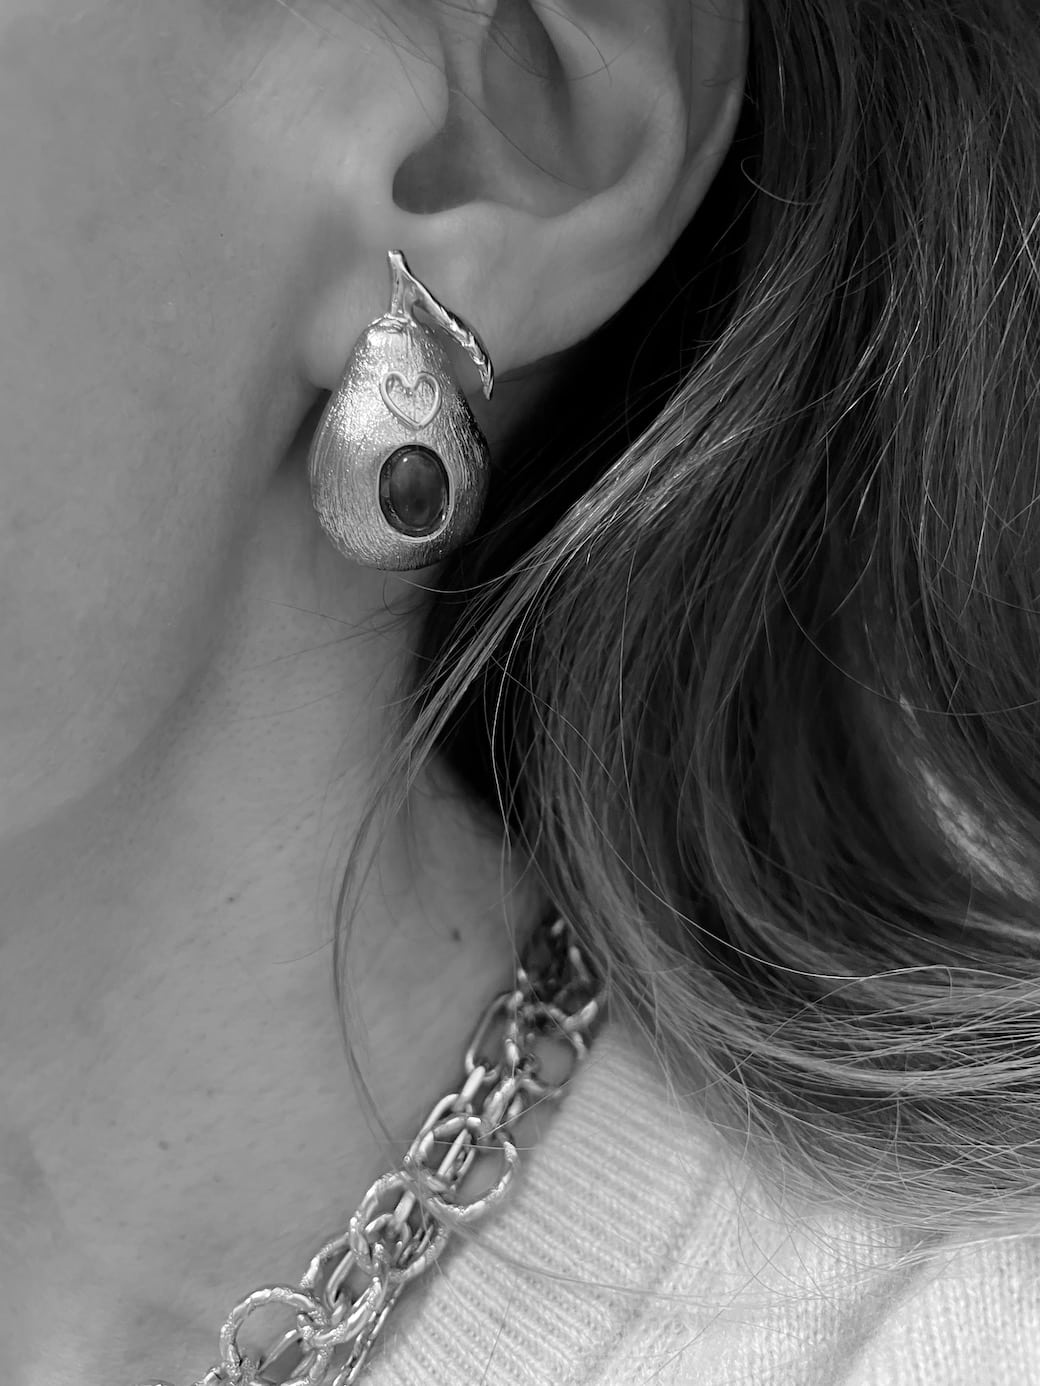 LOUISE Earrings Sterling Silver en argent 925 asymetric Love's Pear by SANDE PARIS Jewelry bijoux Paris